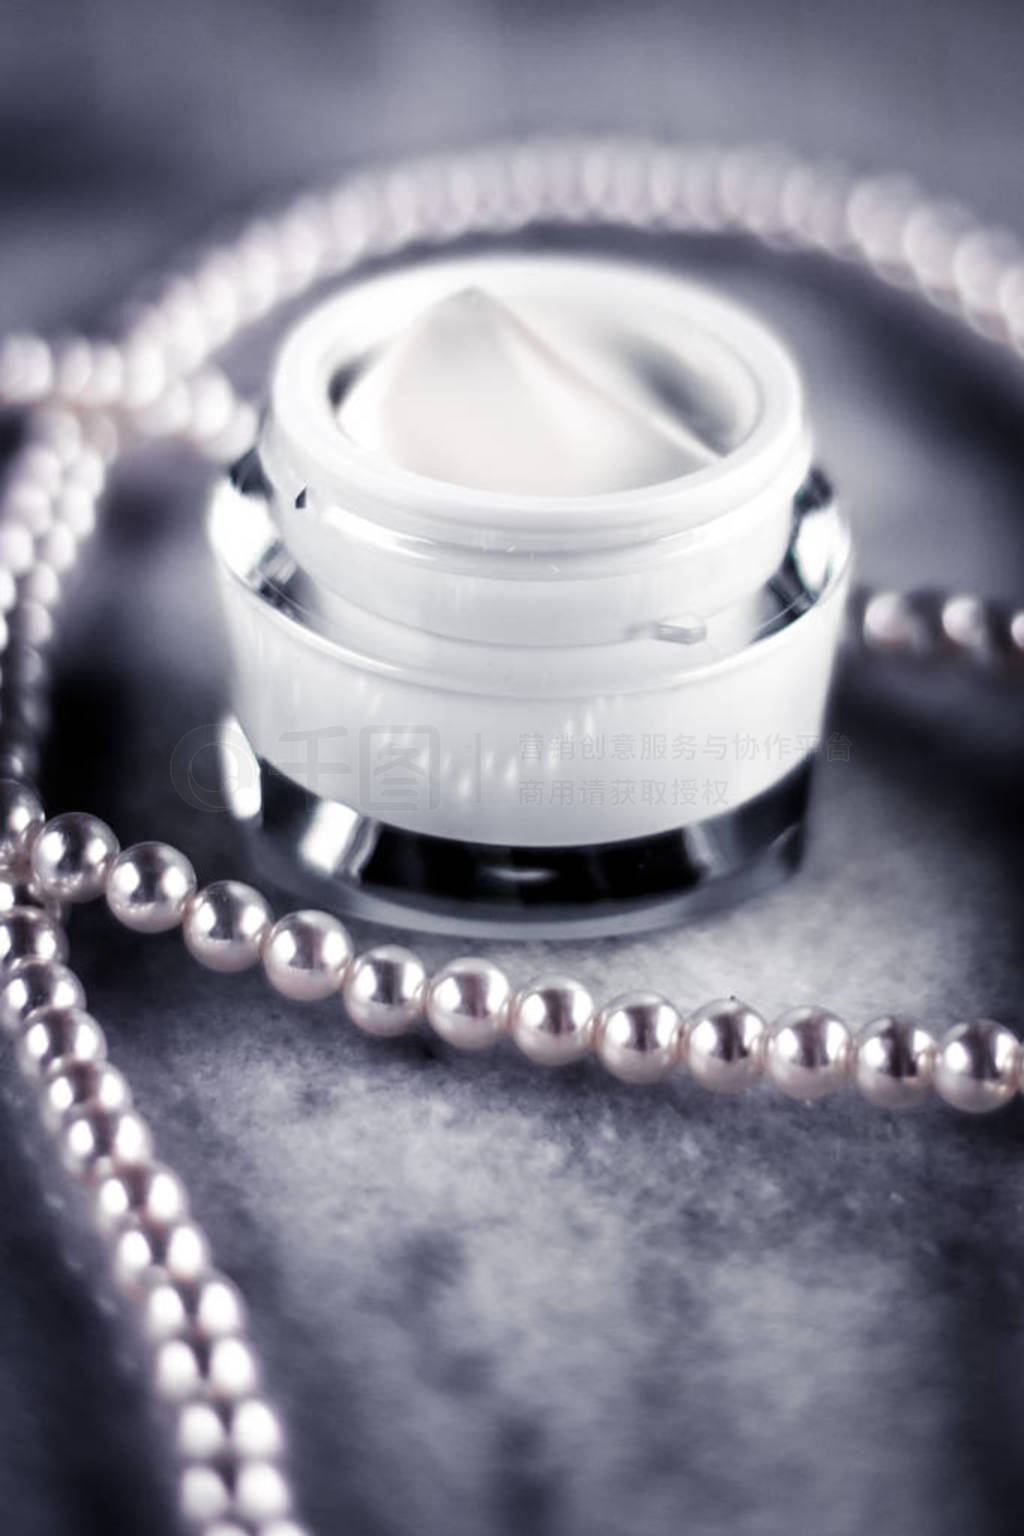 Pearl day face cream skin moisturizer, luxury skincare cosmetic